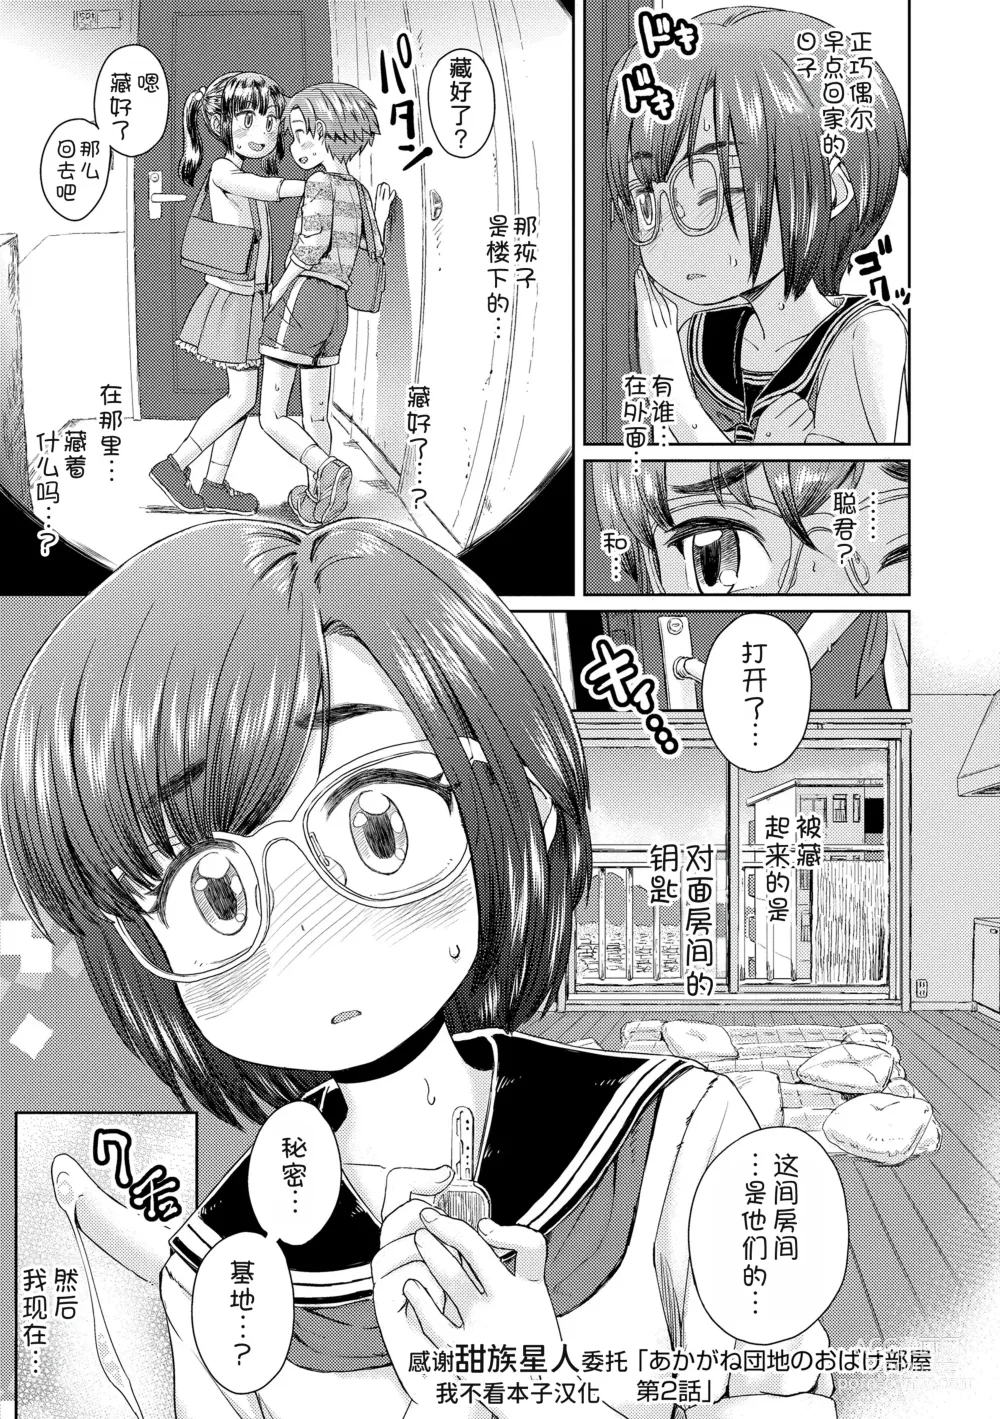 Page 1 of manga Akagane Danchi no Obake Heya Ch. 2